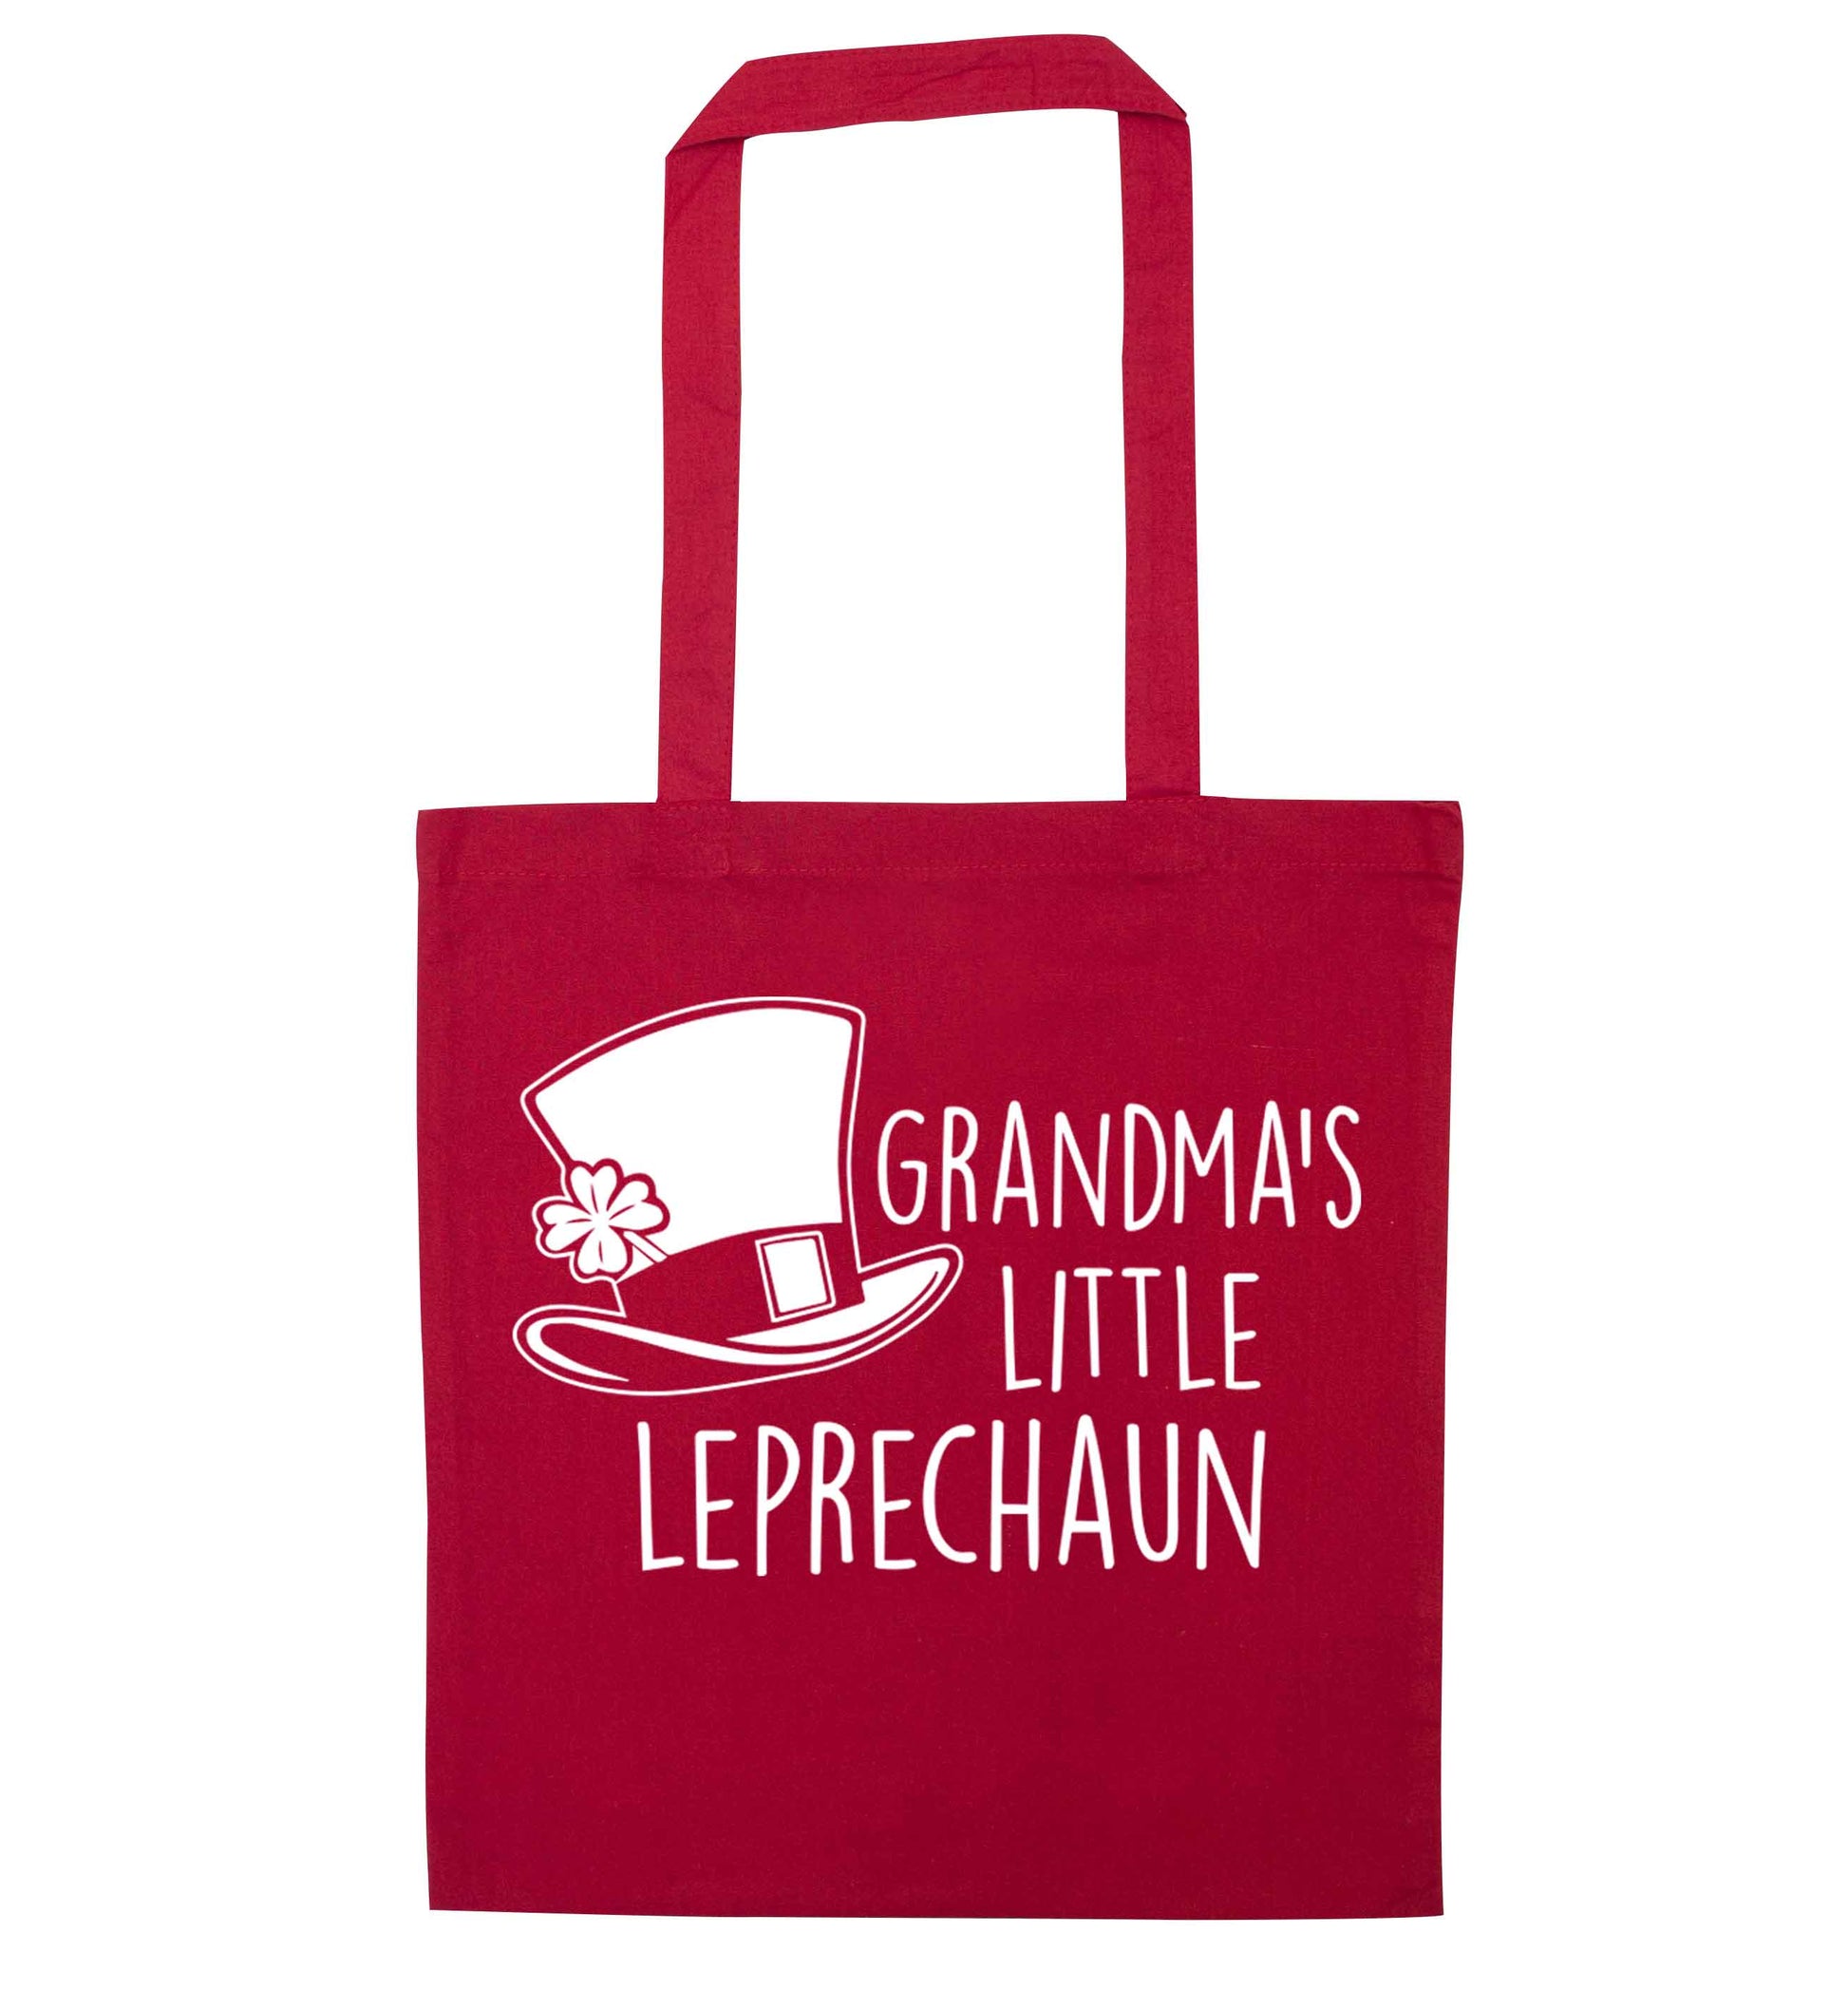 Grandma's little leprechaun red tote bag